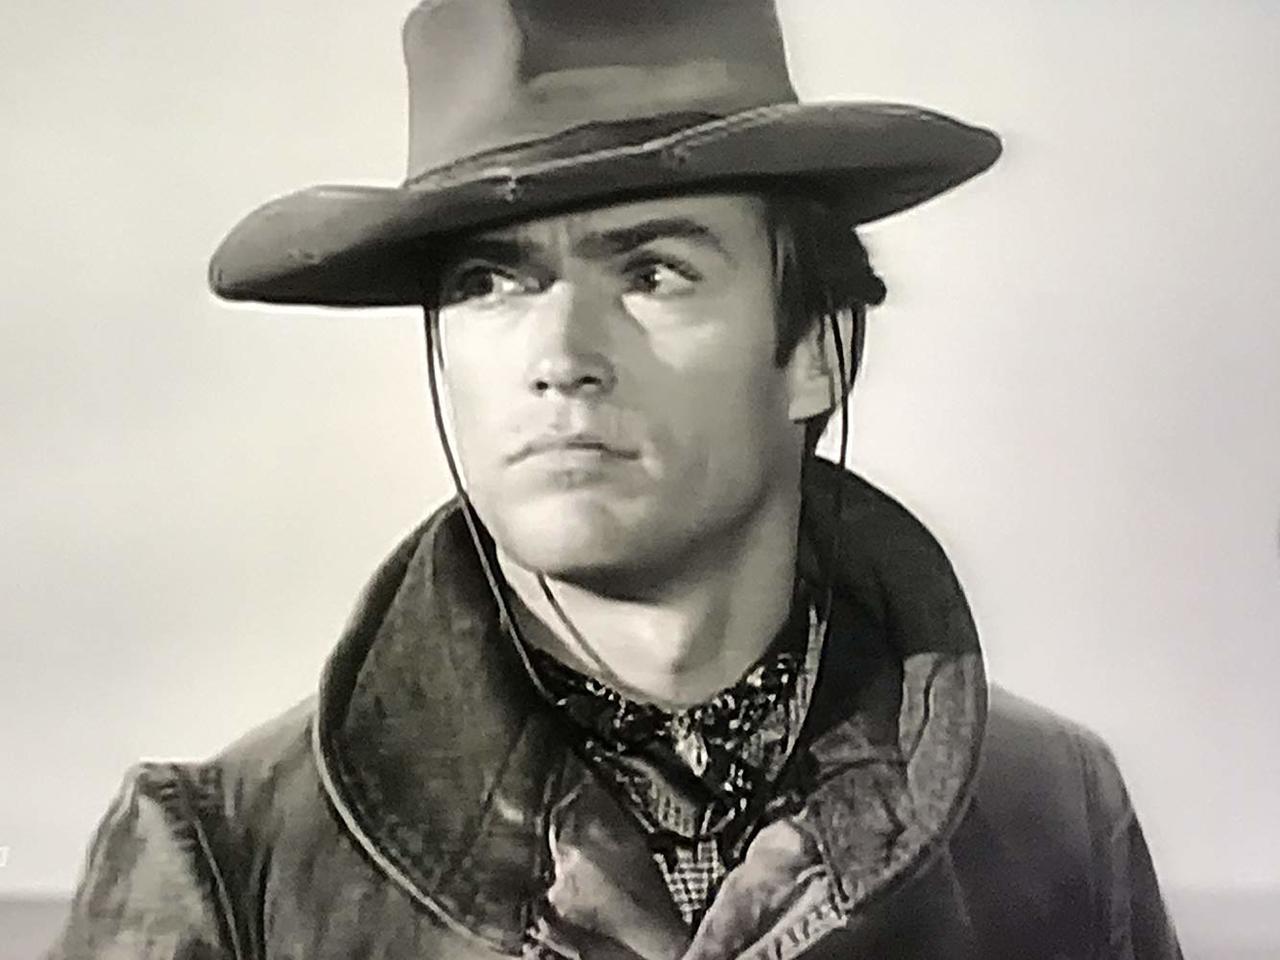 Clint as Rowdy Yates in Rawhide